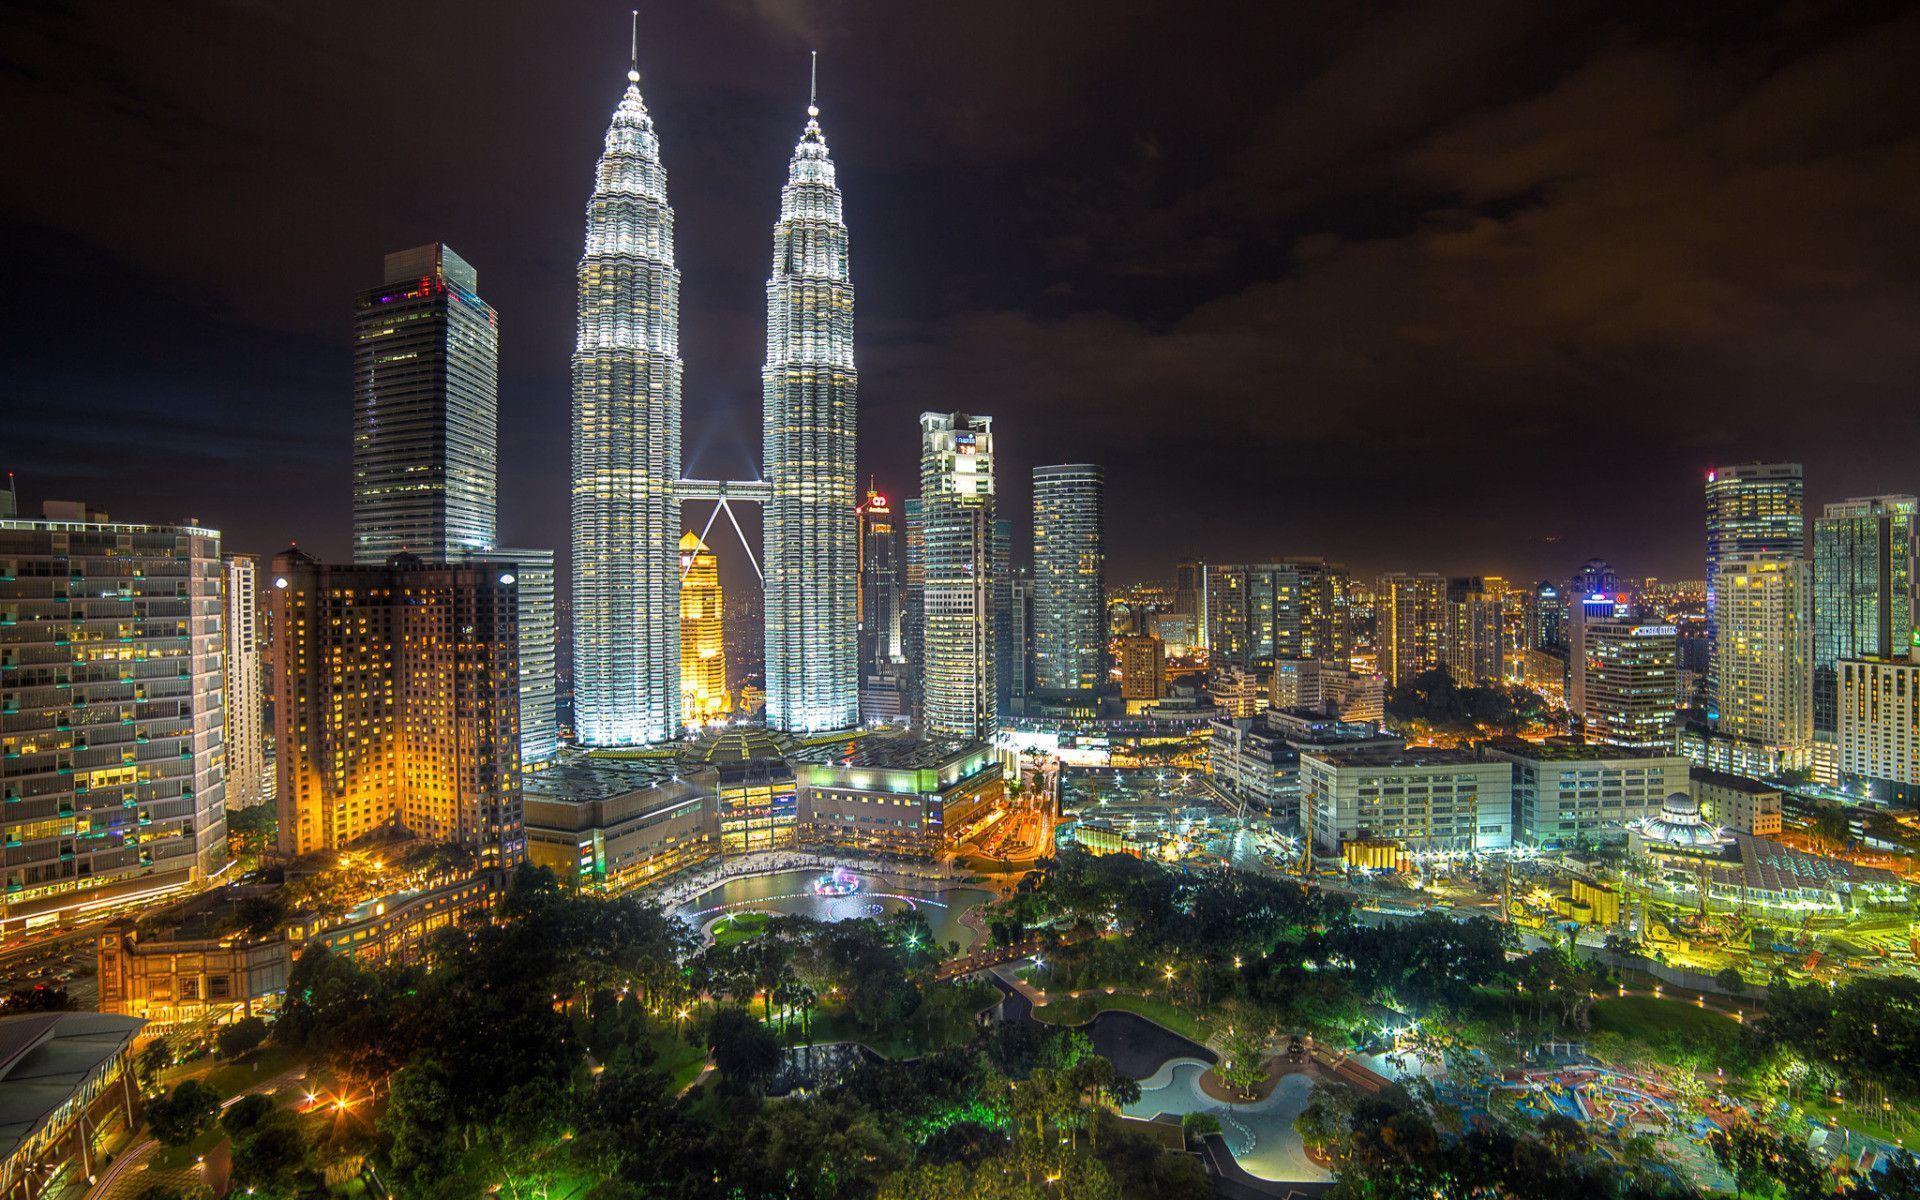 Petronas Towers Malaysia Skyline 4K Wallpapers  HD Wallpapers  ID 22658